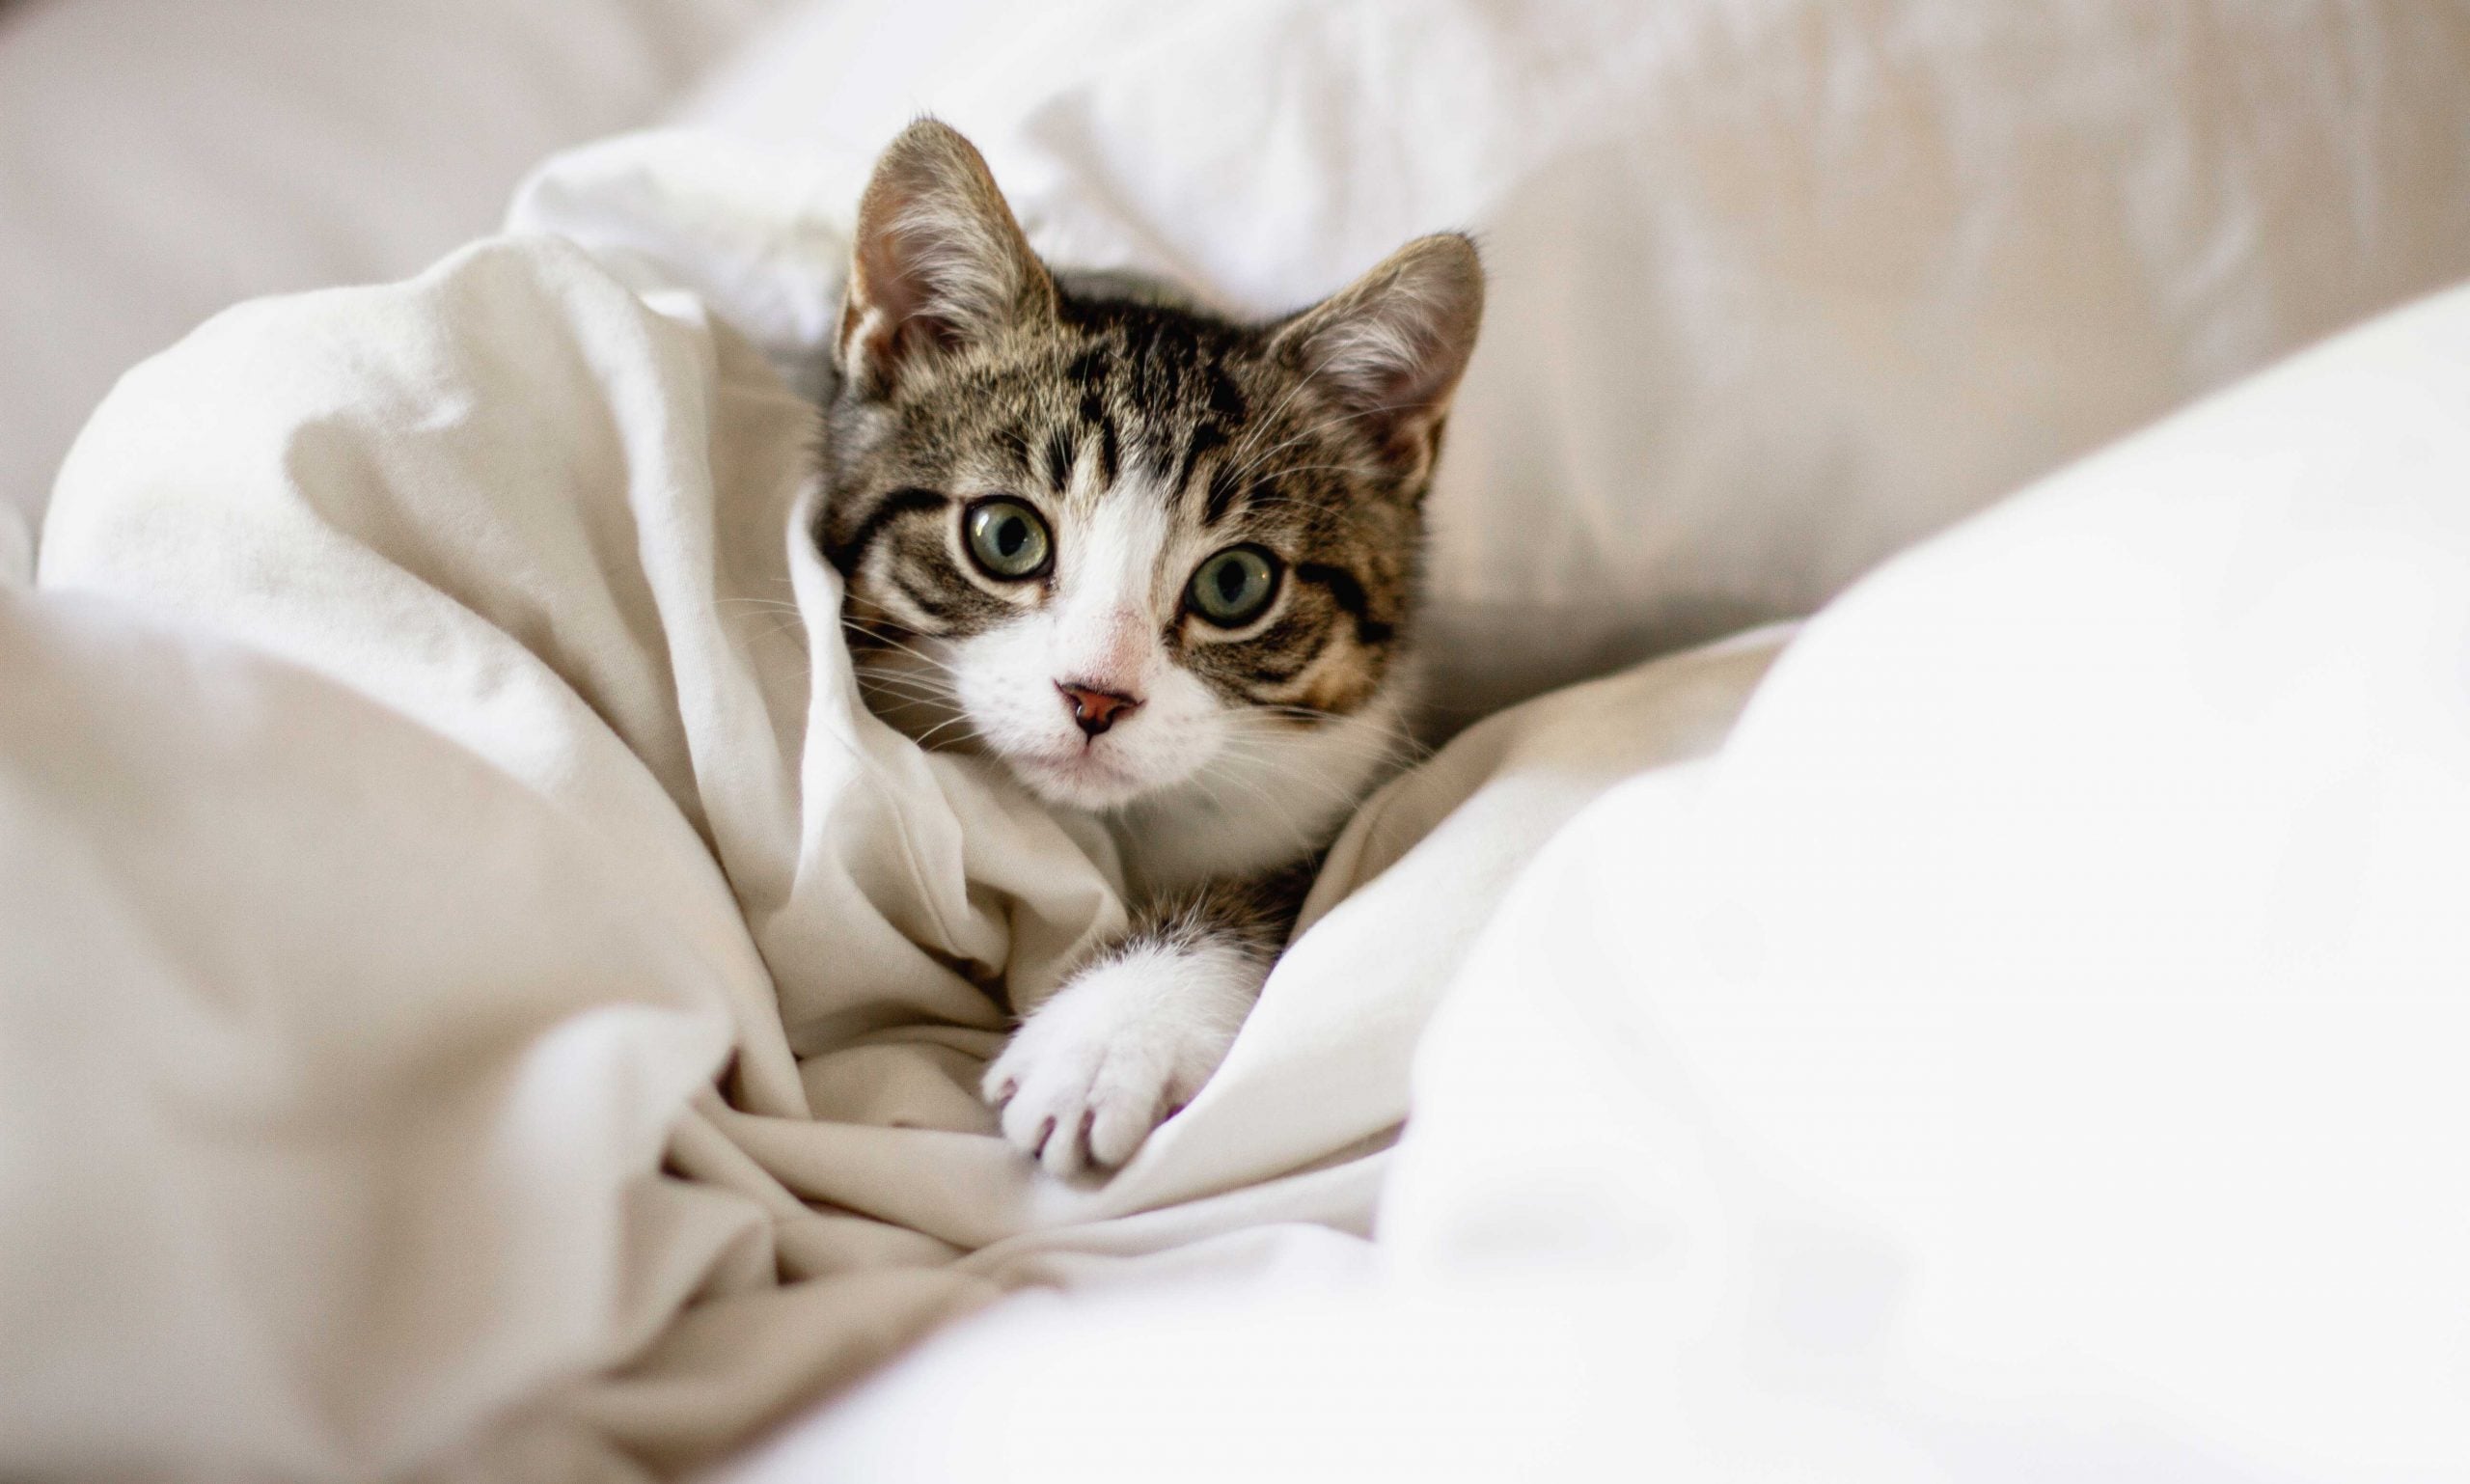 kitten diarrhea: kitten cuddle in bed